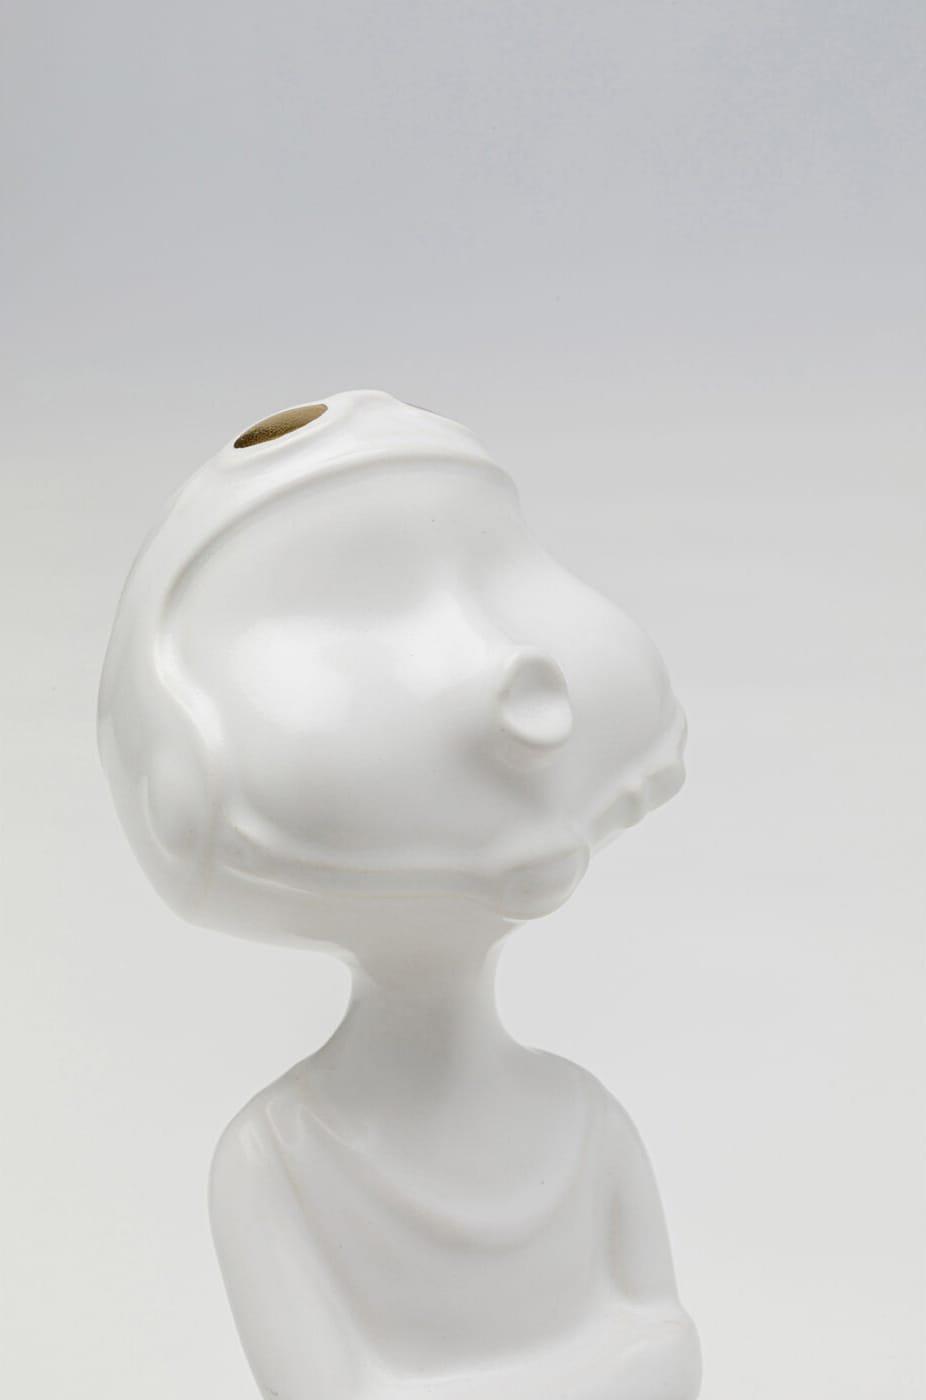 KARE Design Figurine déco Ball Girl blanc 29  